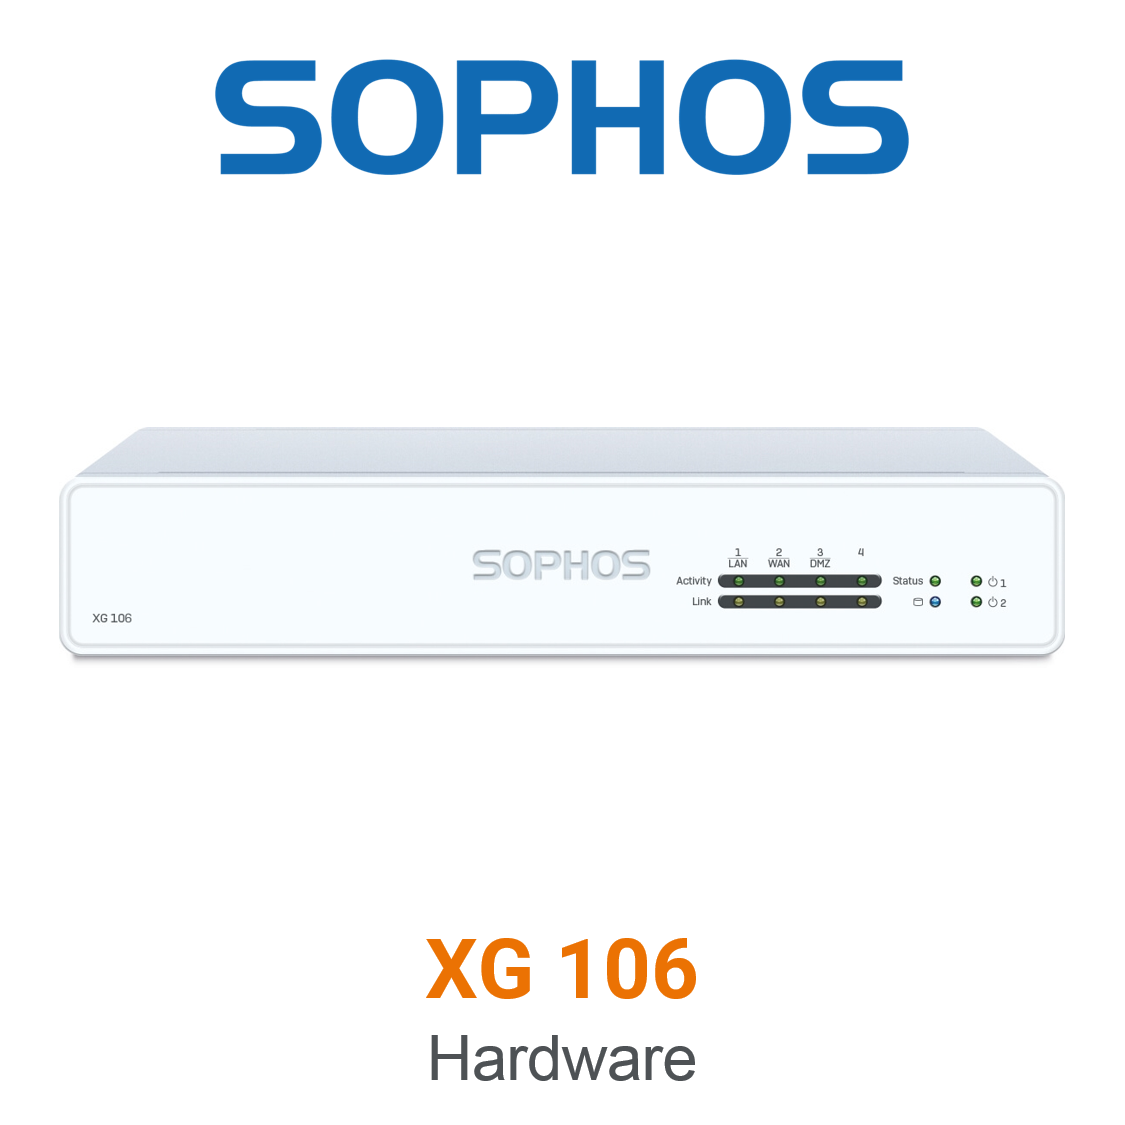 Sophos XG 106 Security Appliance (End of Sale/Life)